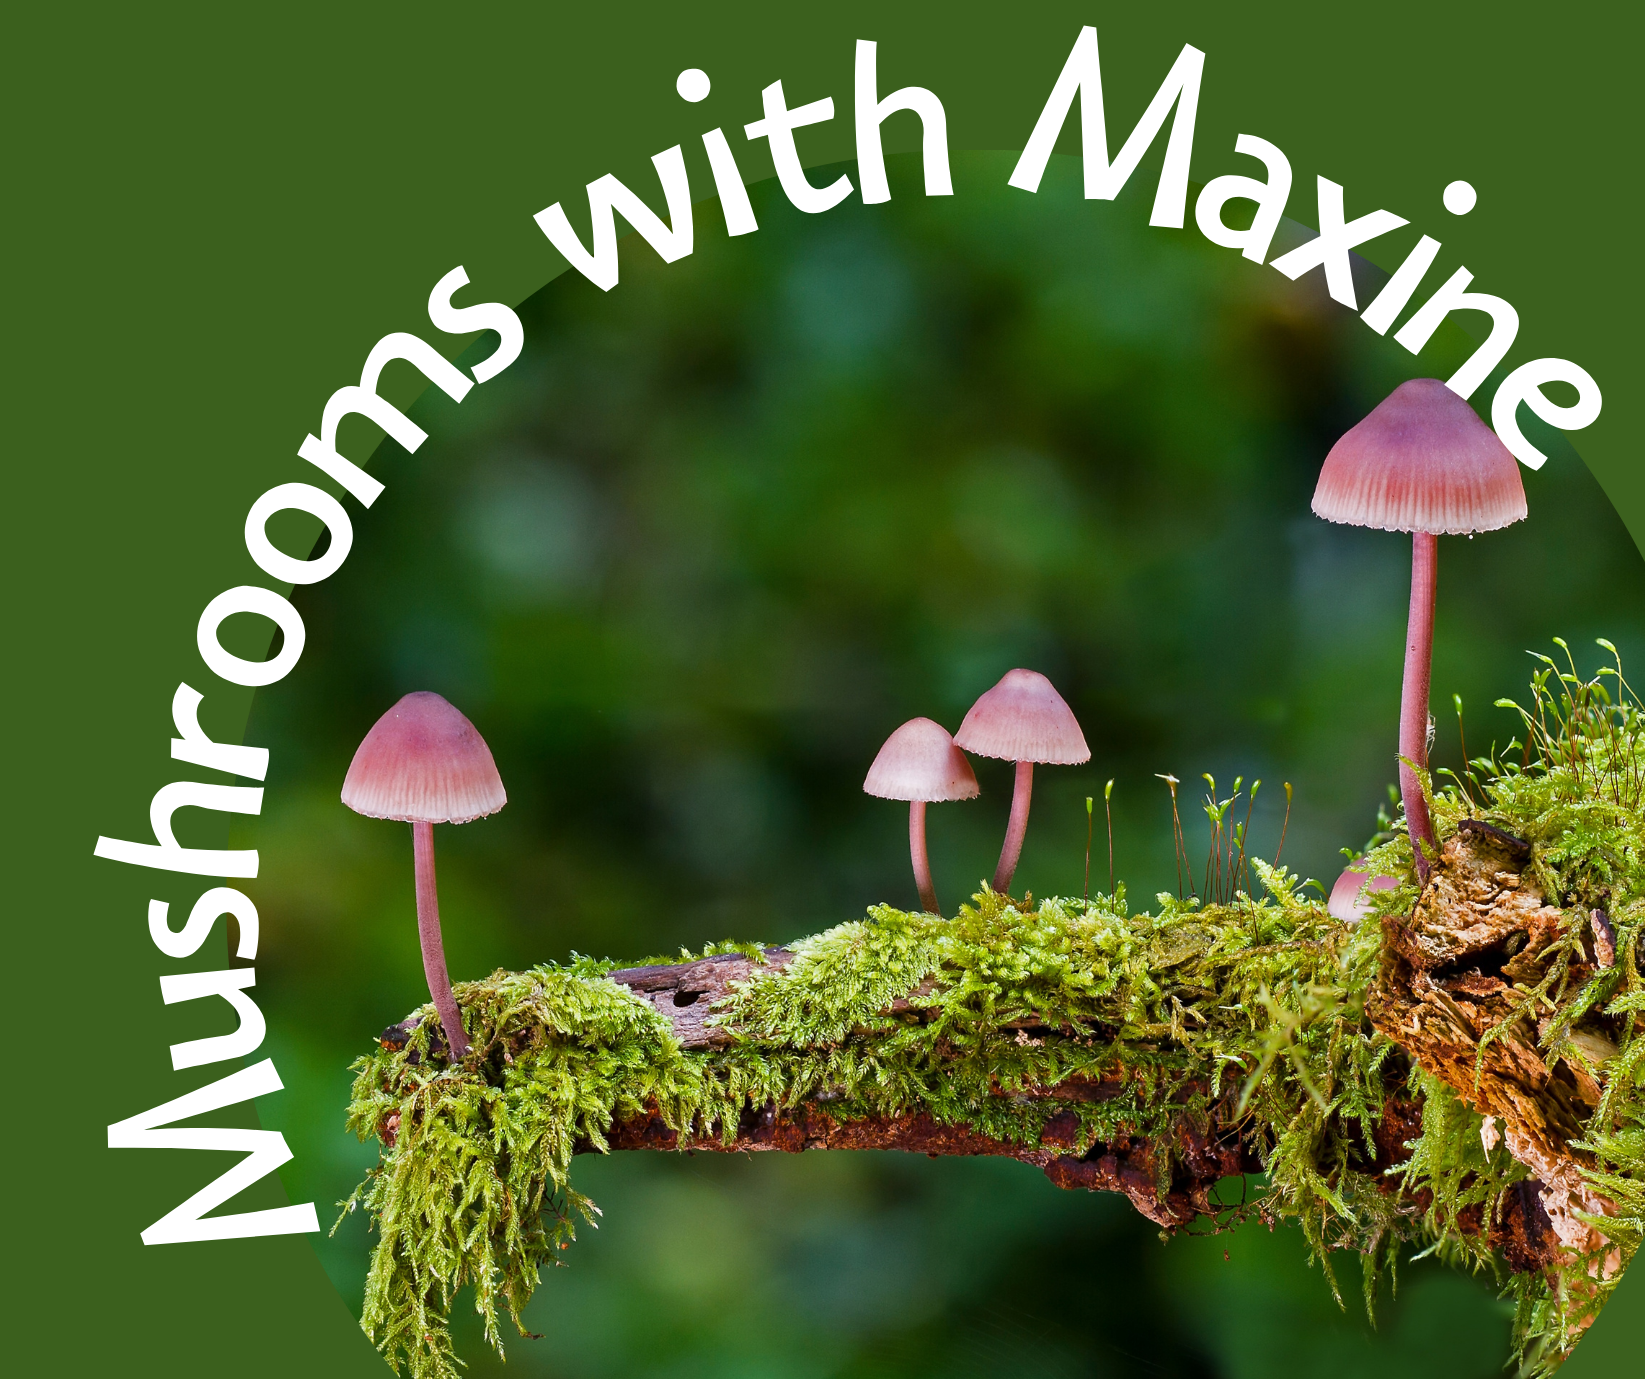 Mushrooms with Maxine